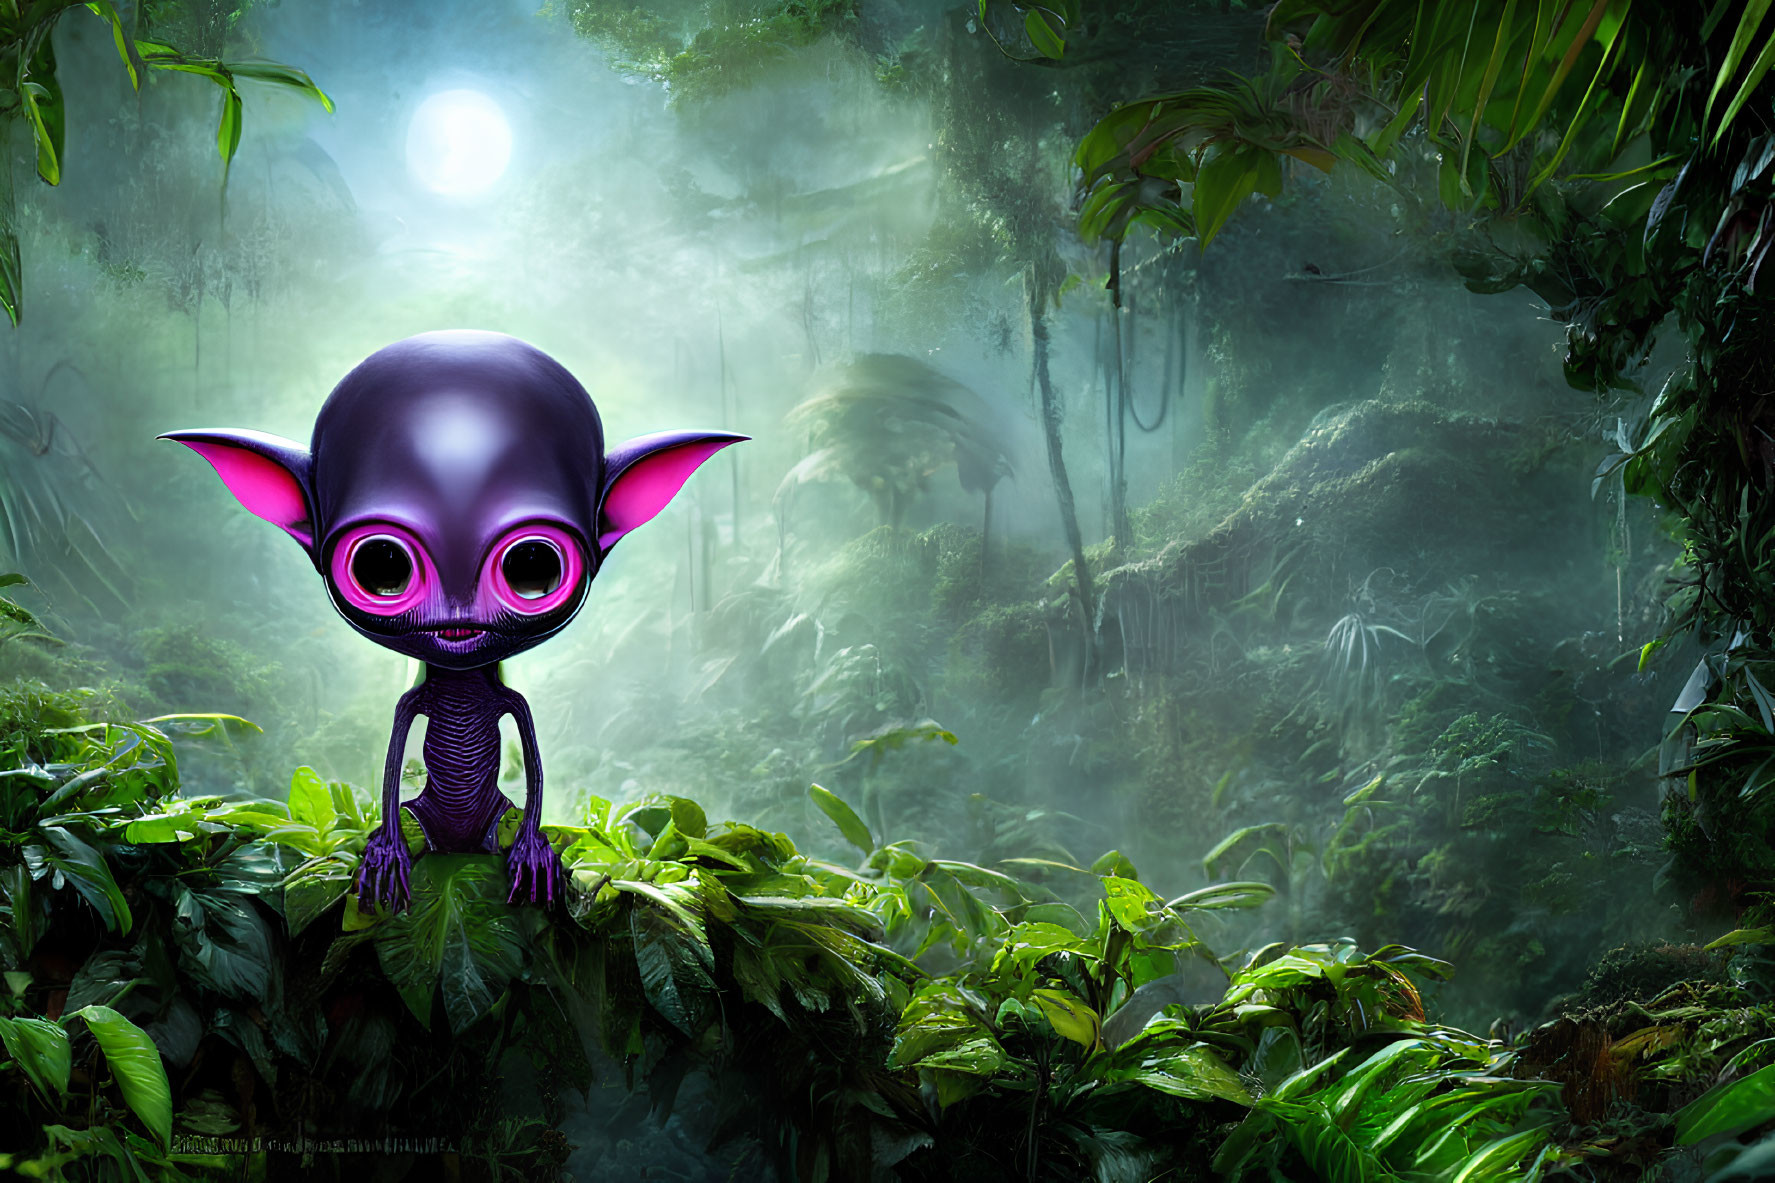 Purple-eyed creature in lush green jungle under moonlight